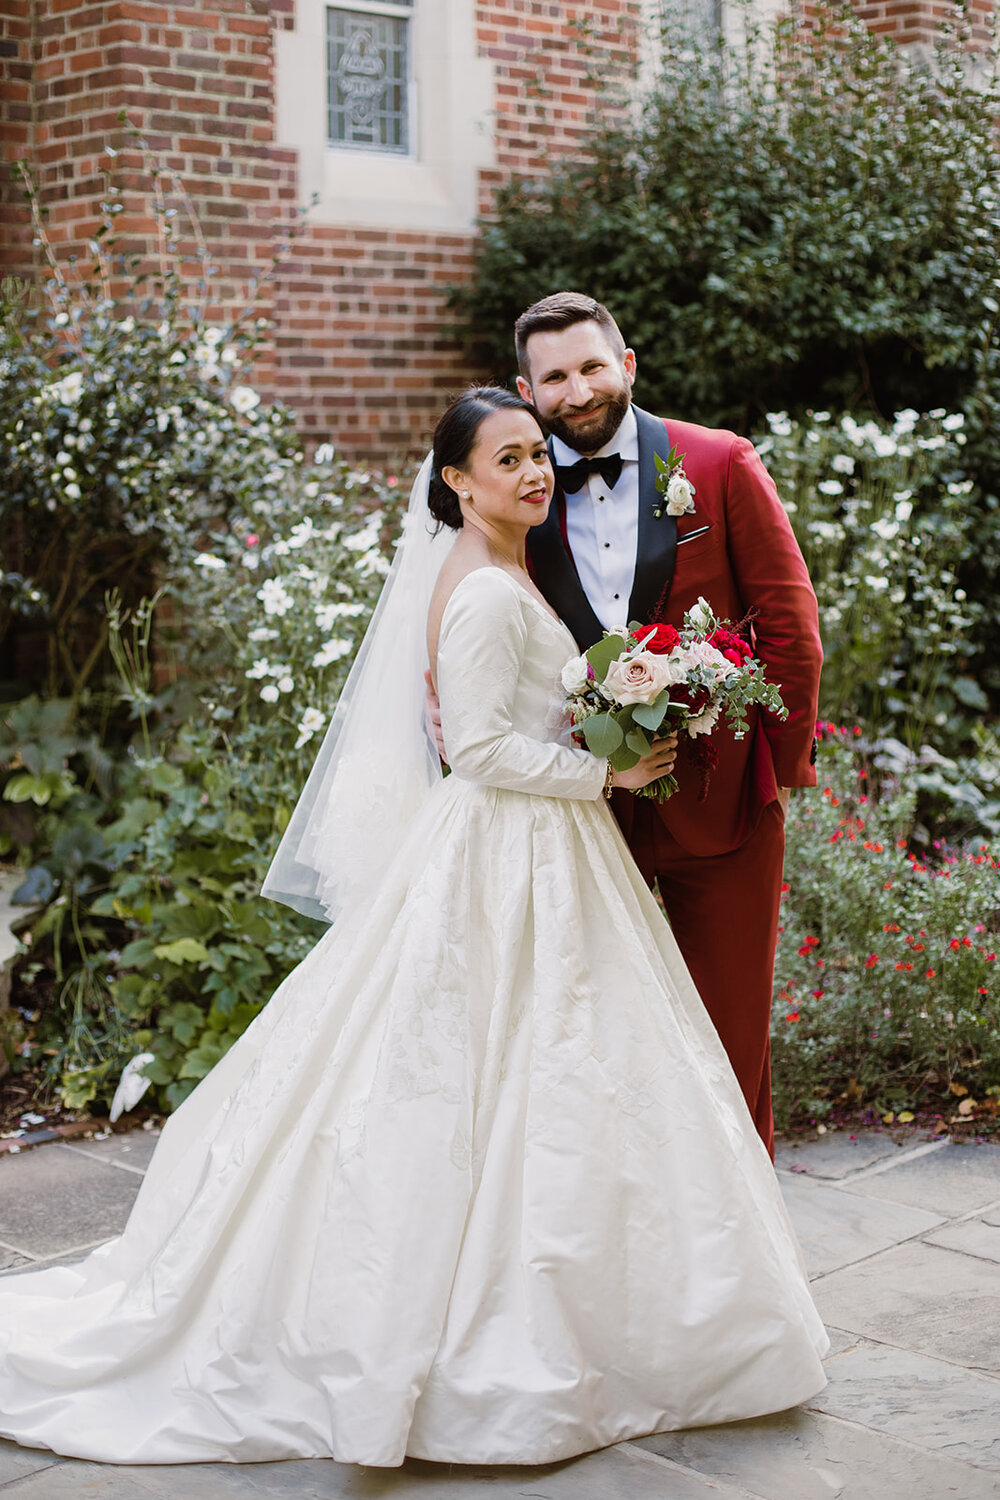  Soft Drop Wedding Veil | Bride and Groom Portraits | Romantic wedding at St. Bridget Catholic Church, Richmond, VA | Black tie wedding with a red tux and custom Anne Barge gown 